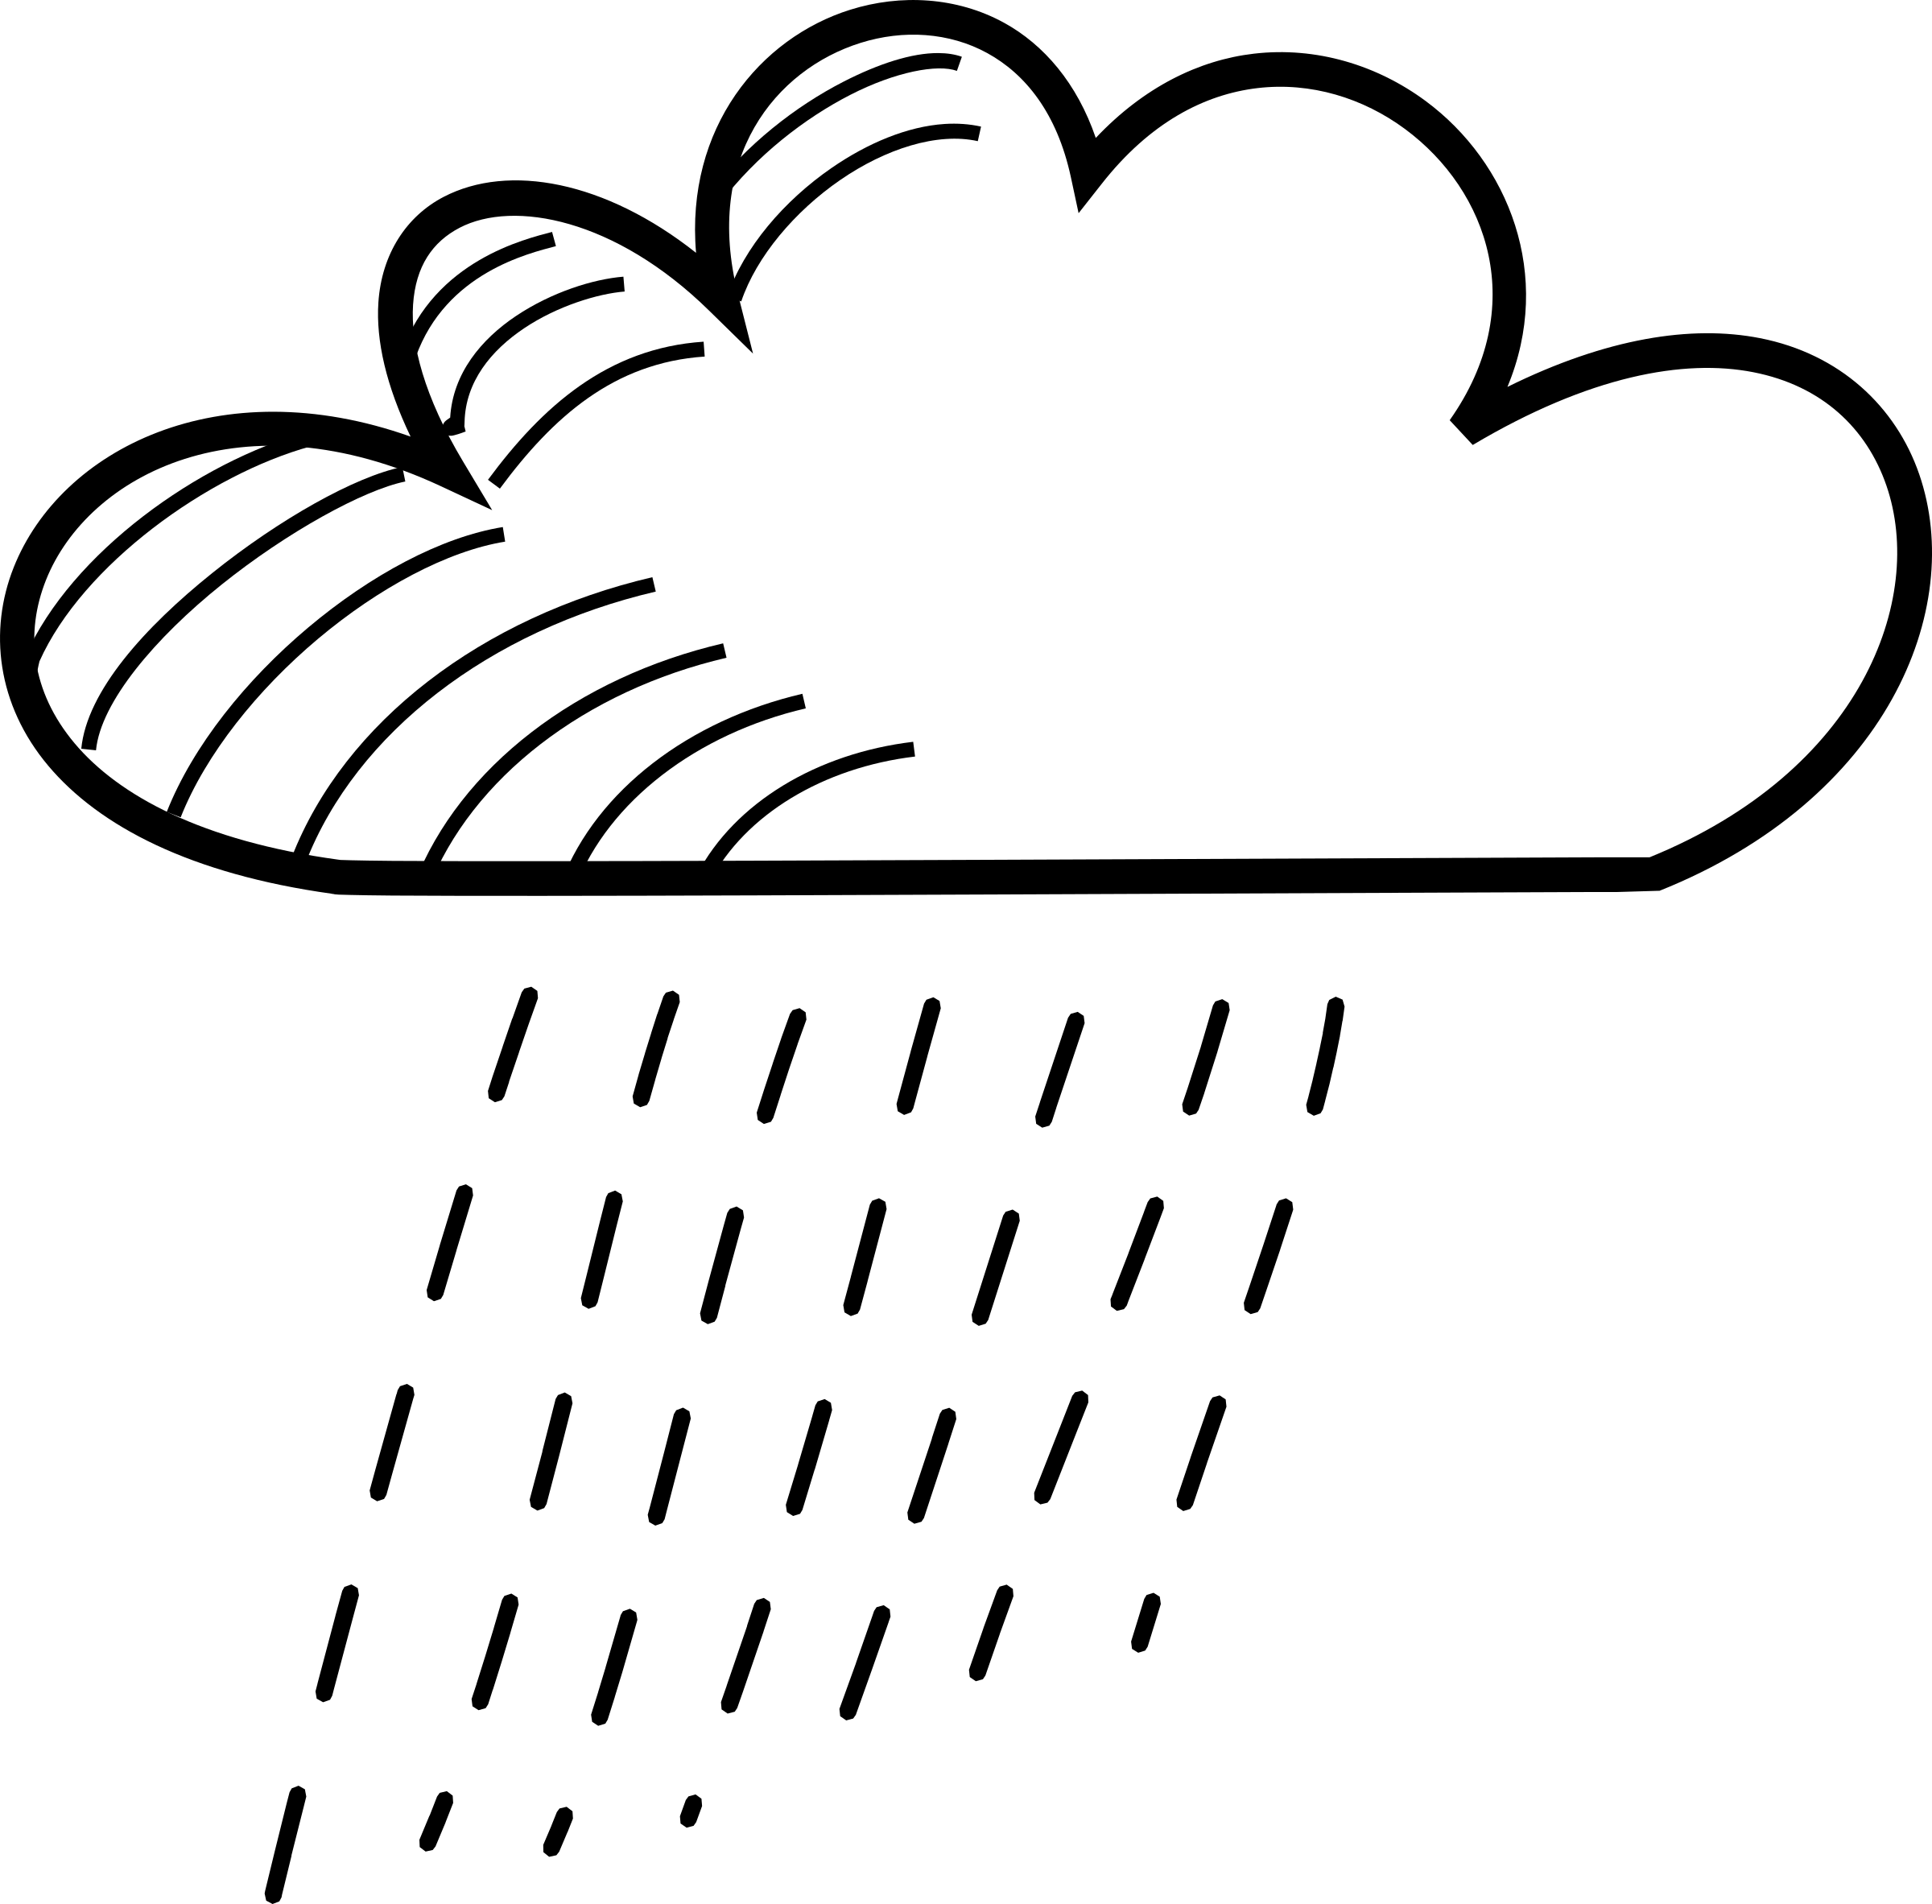 Rainy stick figure cloud. Clipart rain rainny